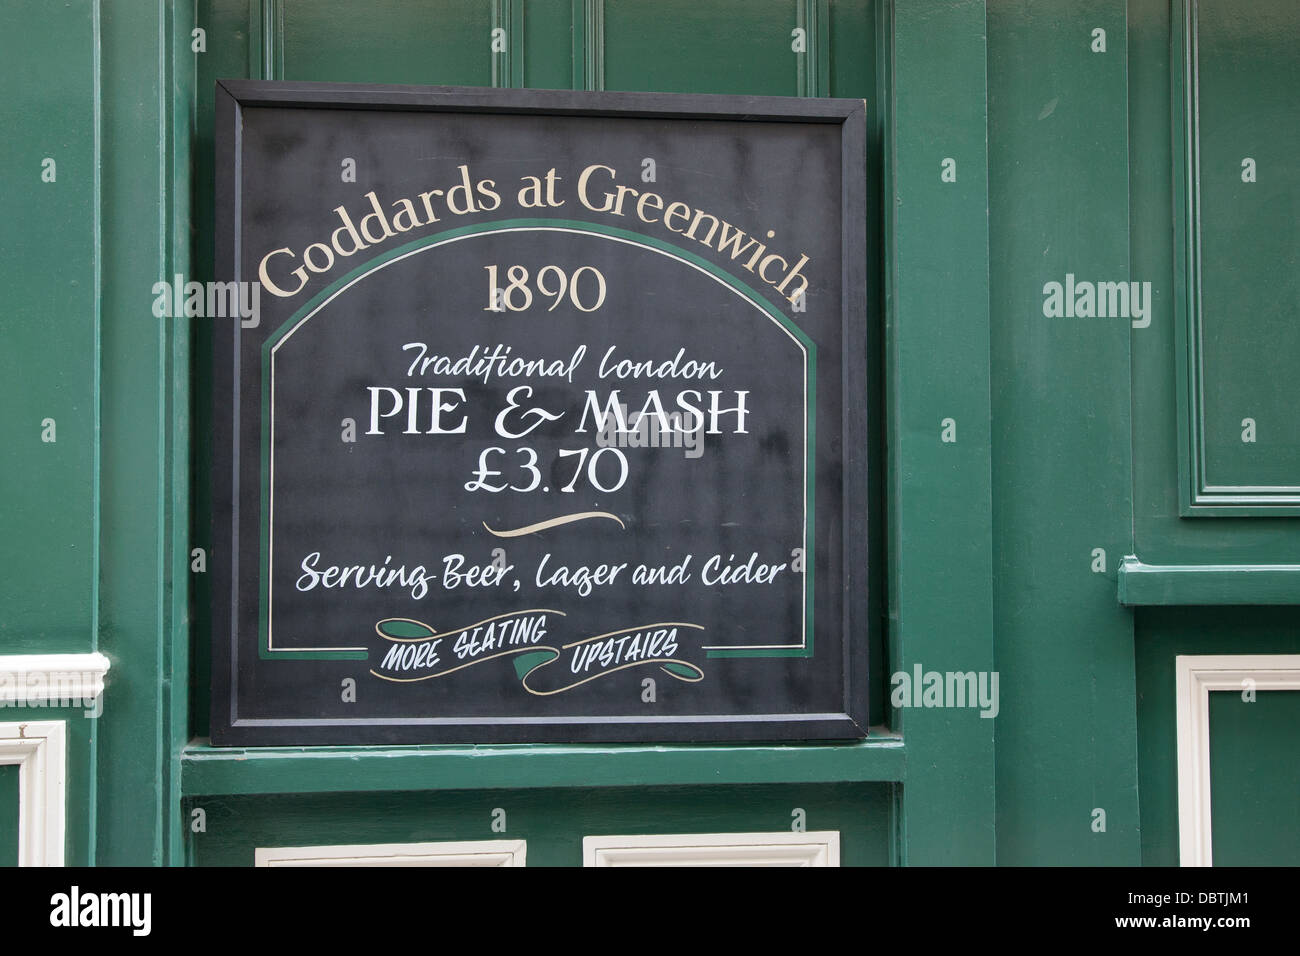 Goddards at Greenwich Restaurant Sign; Greenwich, London, England, UK Stock Photo